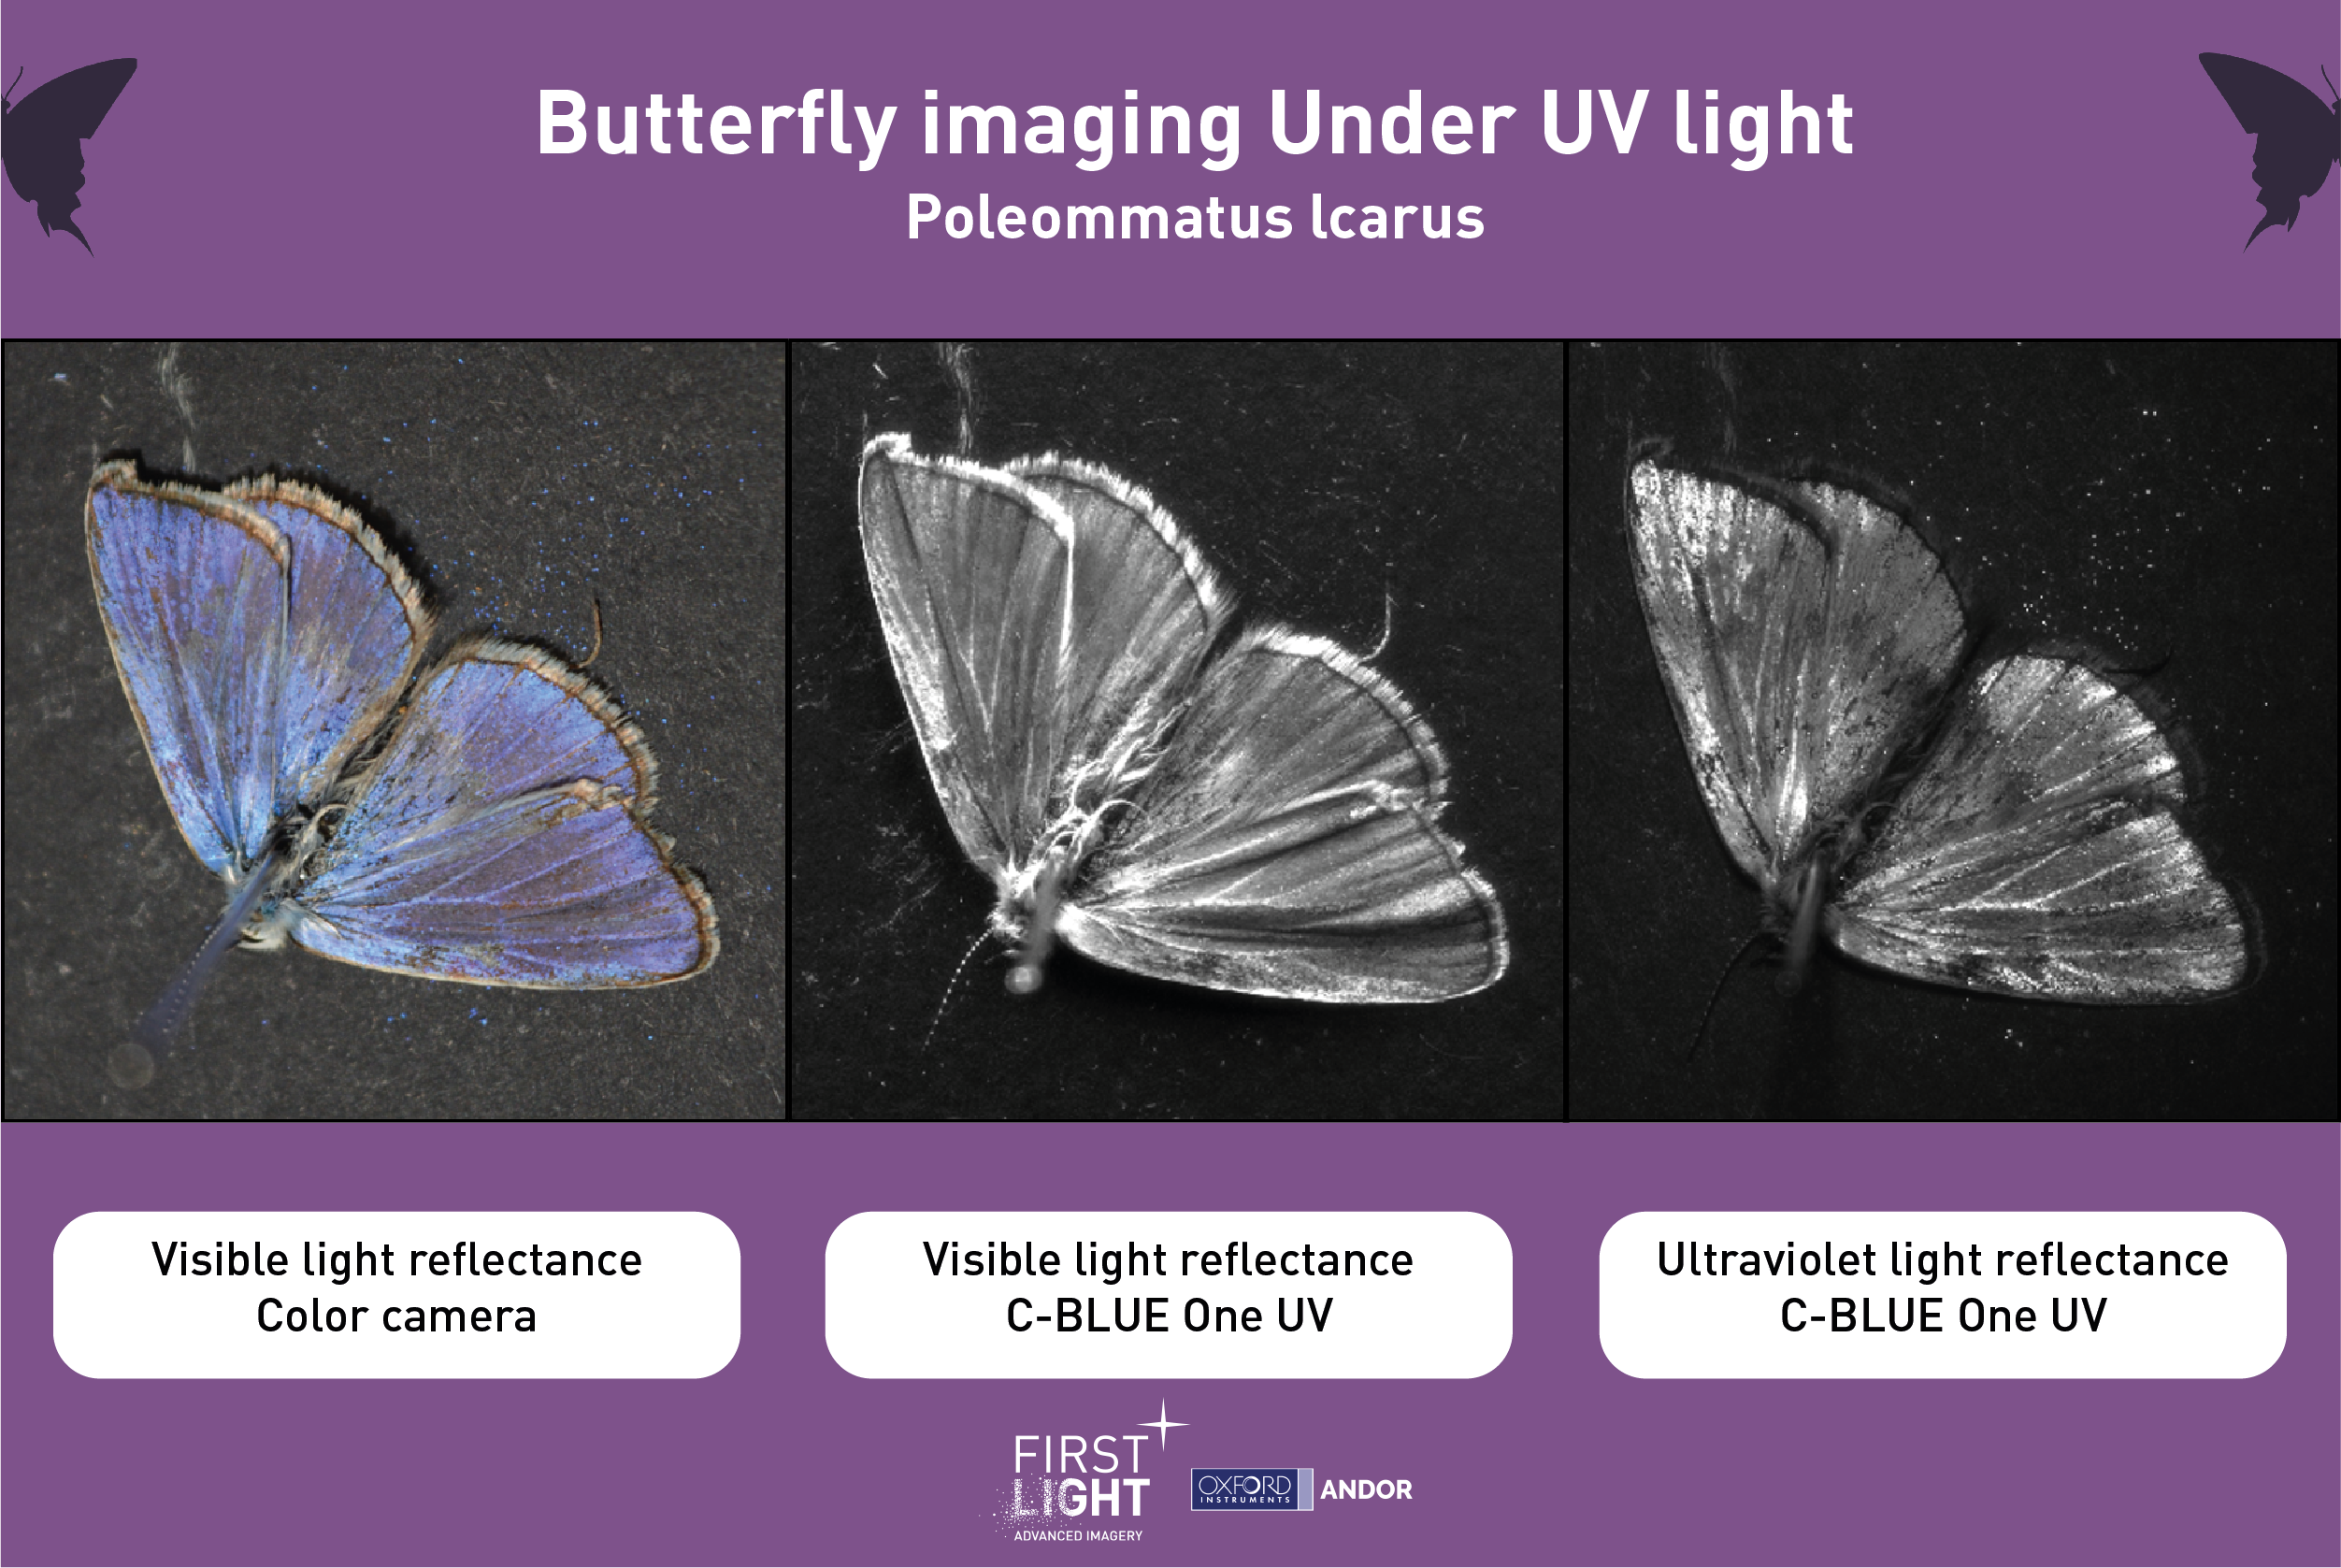 BUTTERFLY IMAGING UNDER UV LIGHT